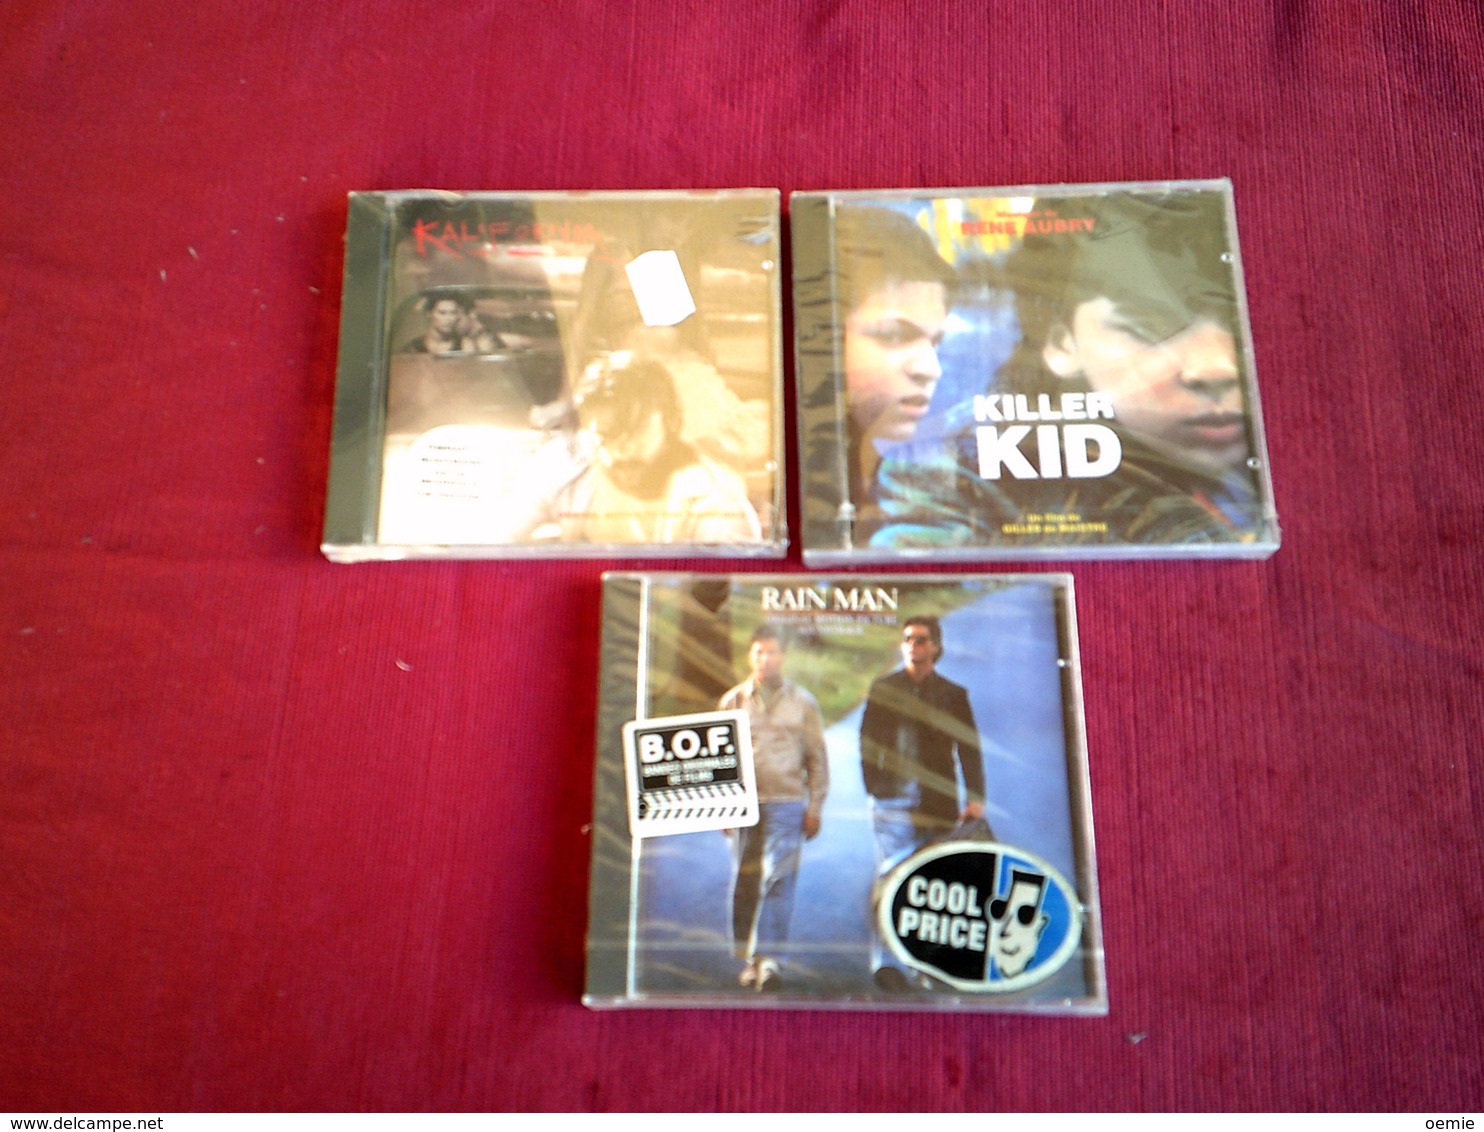 COLLECTION DE 3 CD ALBUMS  DE BANDE ORIGINAL DE  FILM ° KALIFORNIA  + KILLER KID + RAIN MAN - Vollständige Sammlungen